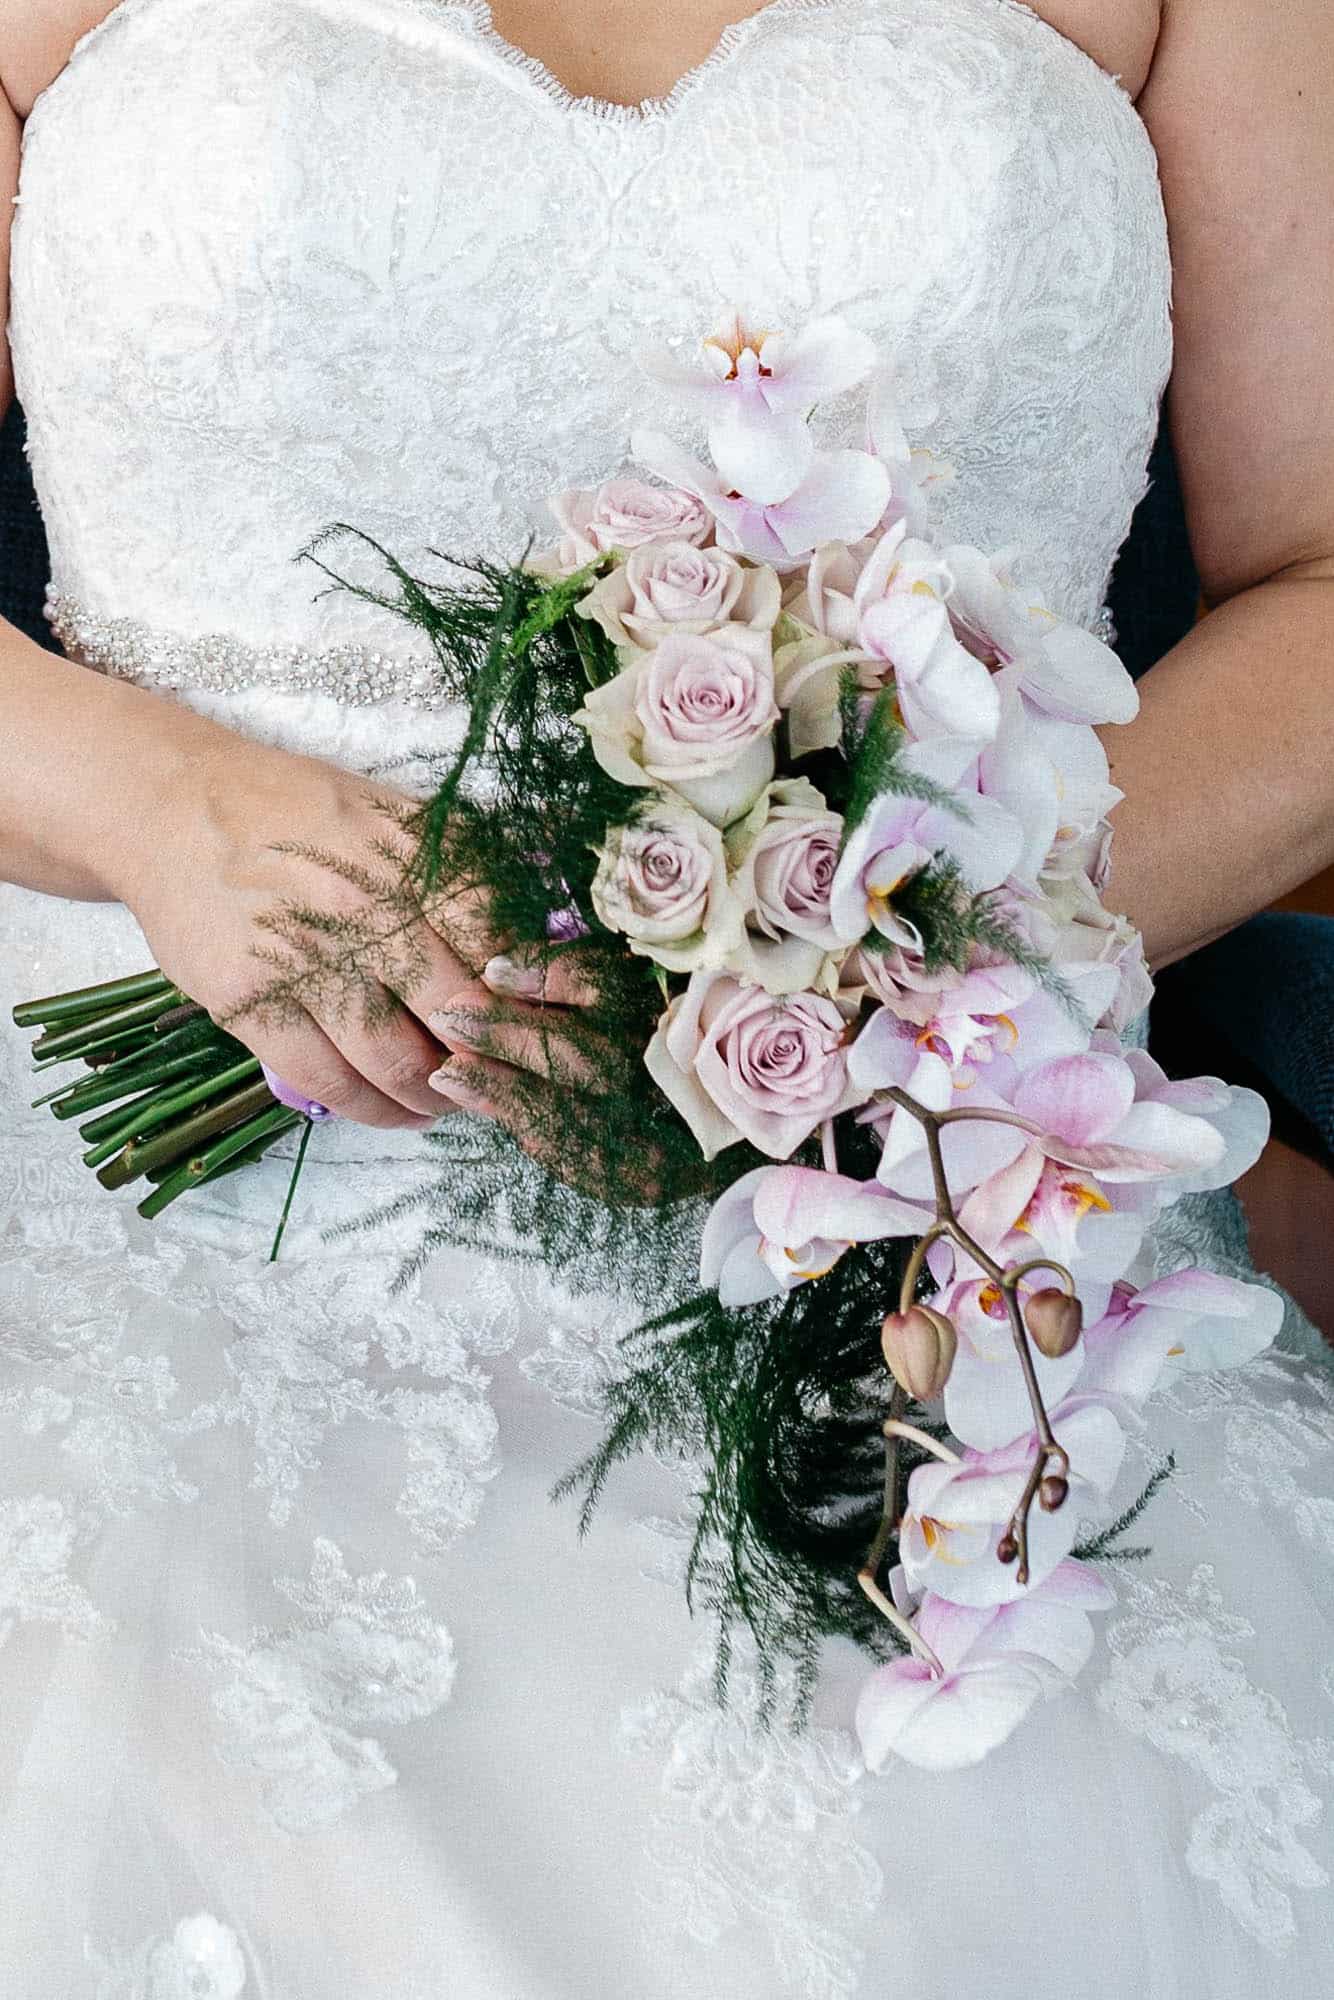 A bride in wedding dress with a wedding bouquet.